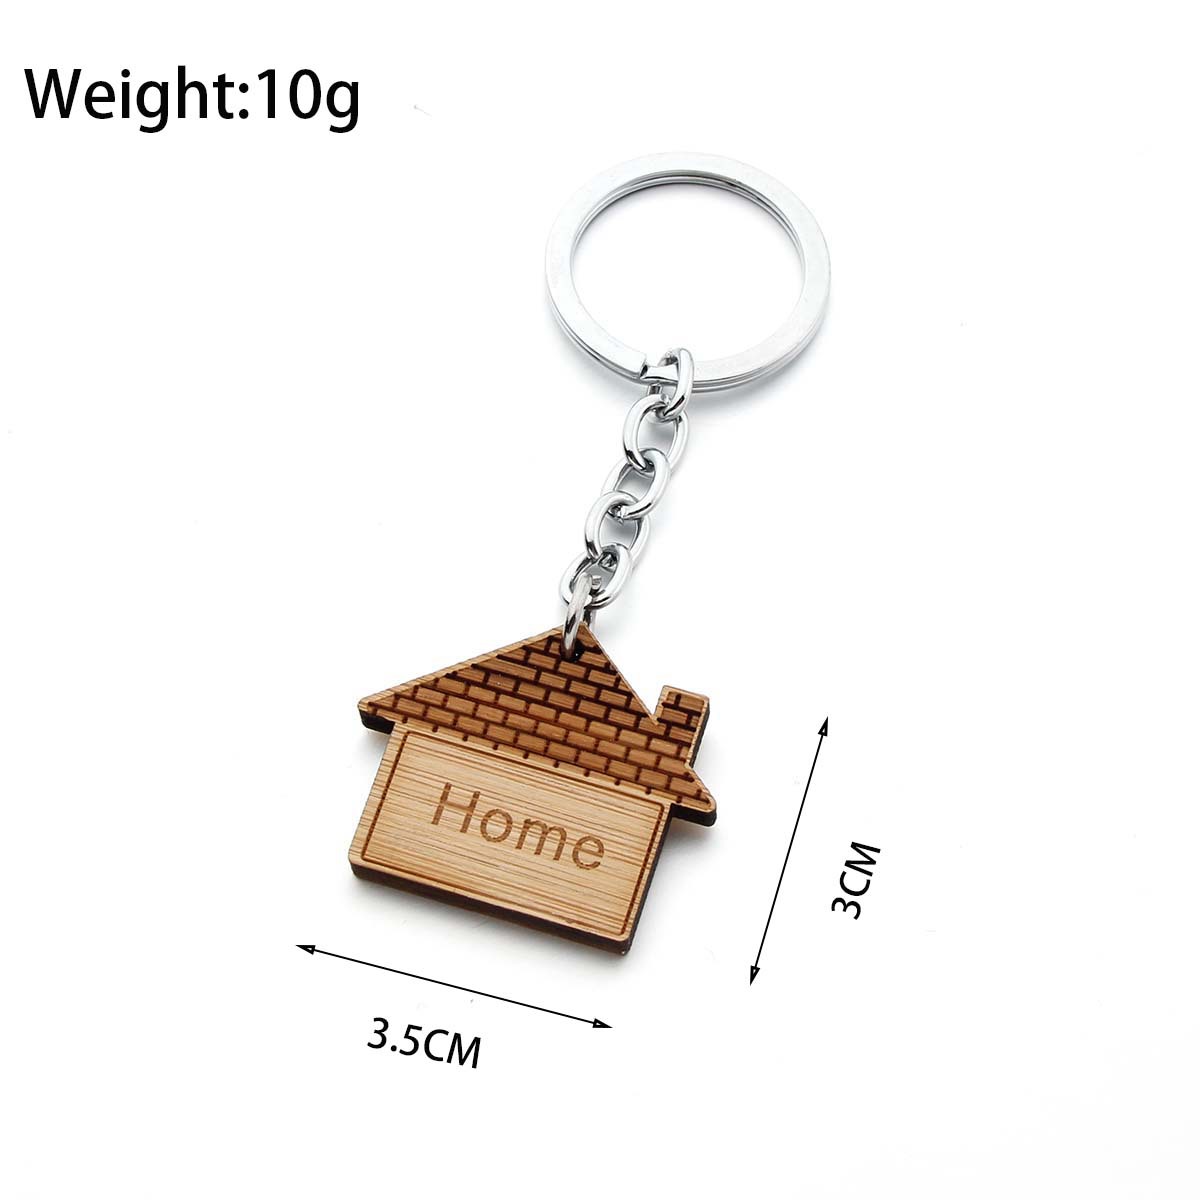 Creative Home Wood Keychain Pendant Gift Mini House Wood Car Bag Keychains smycken Bulkpris